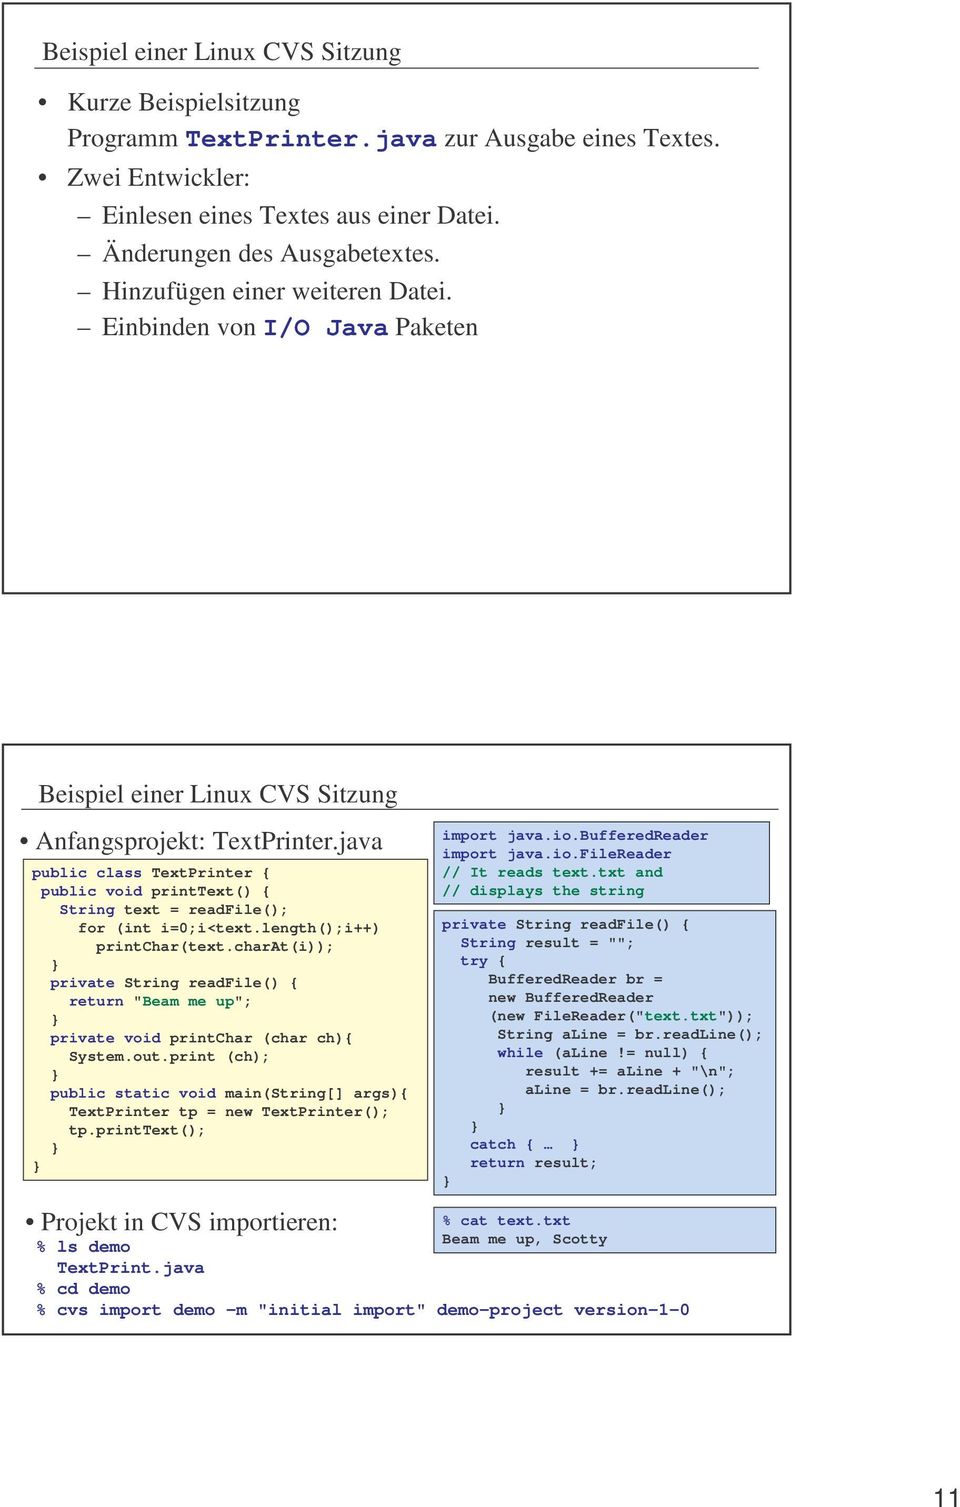 java public class TextPrinter { public void printtext() { String text = readfile(); for (int i=0;i<text.length();i++) printchar(text.